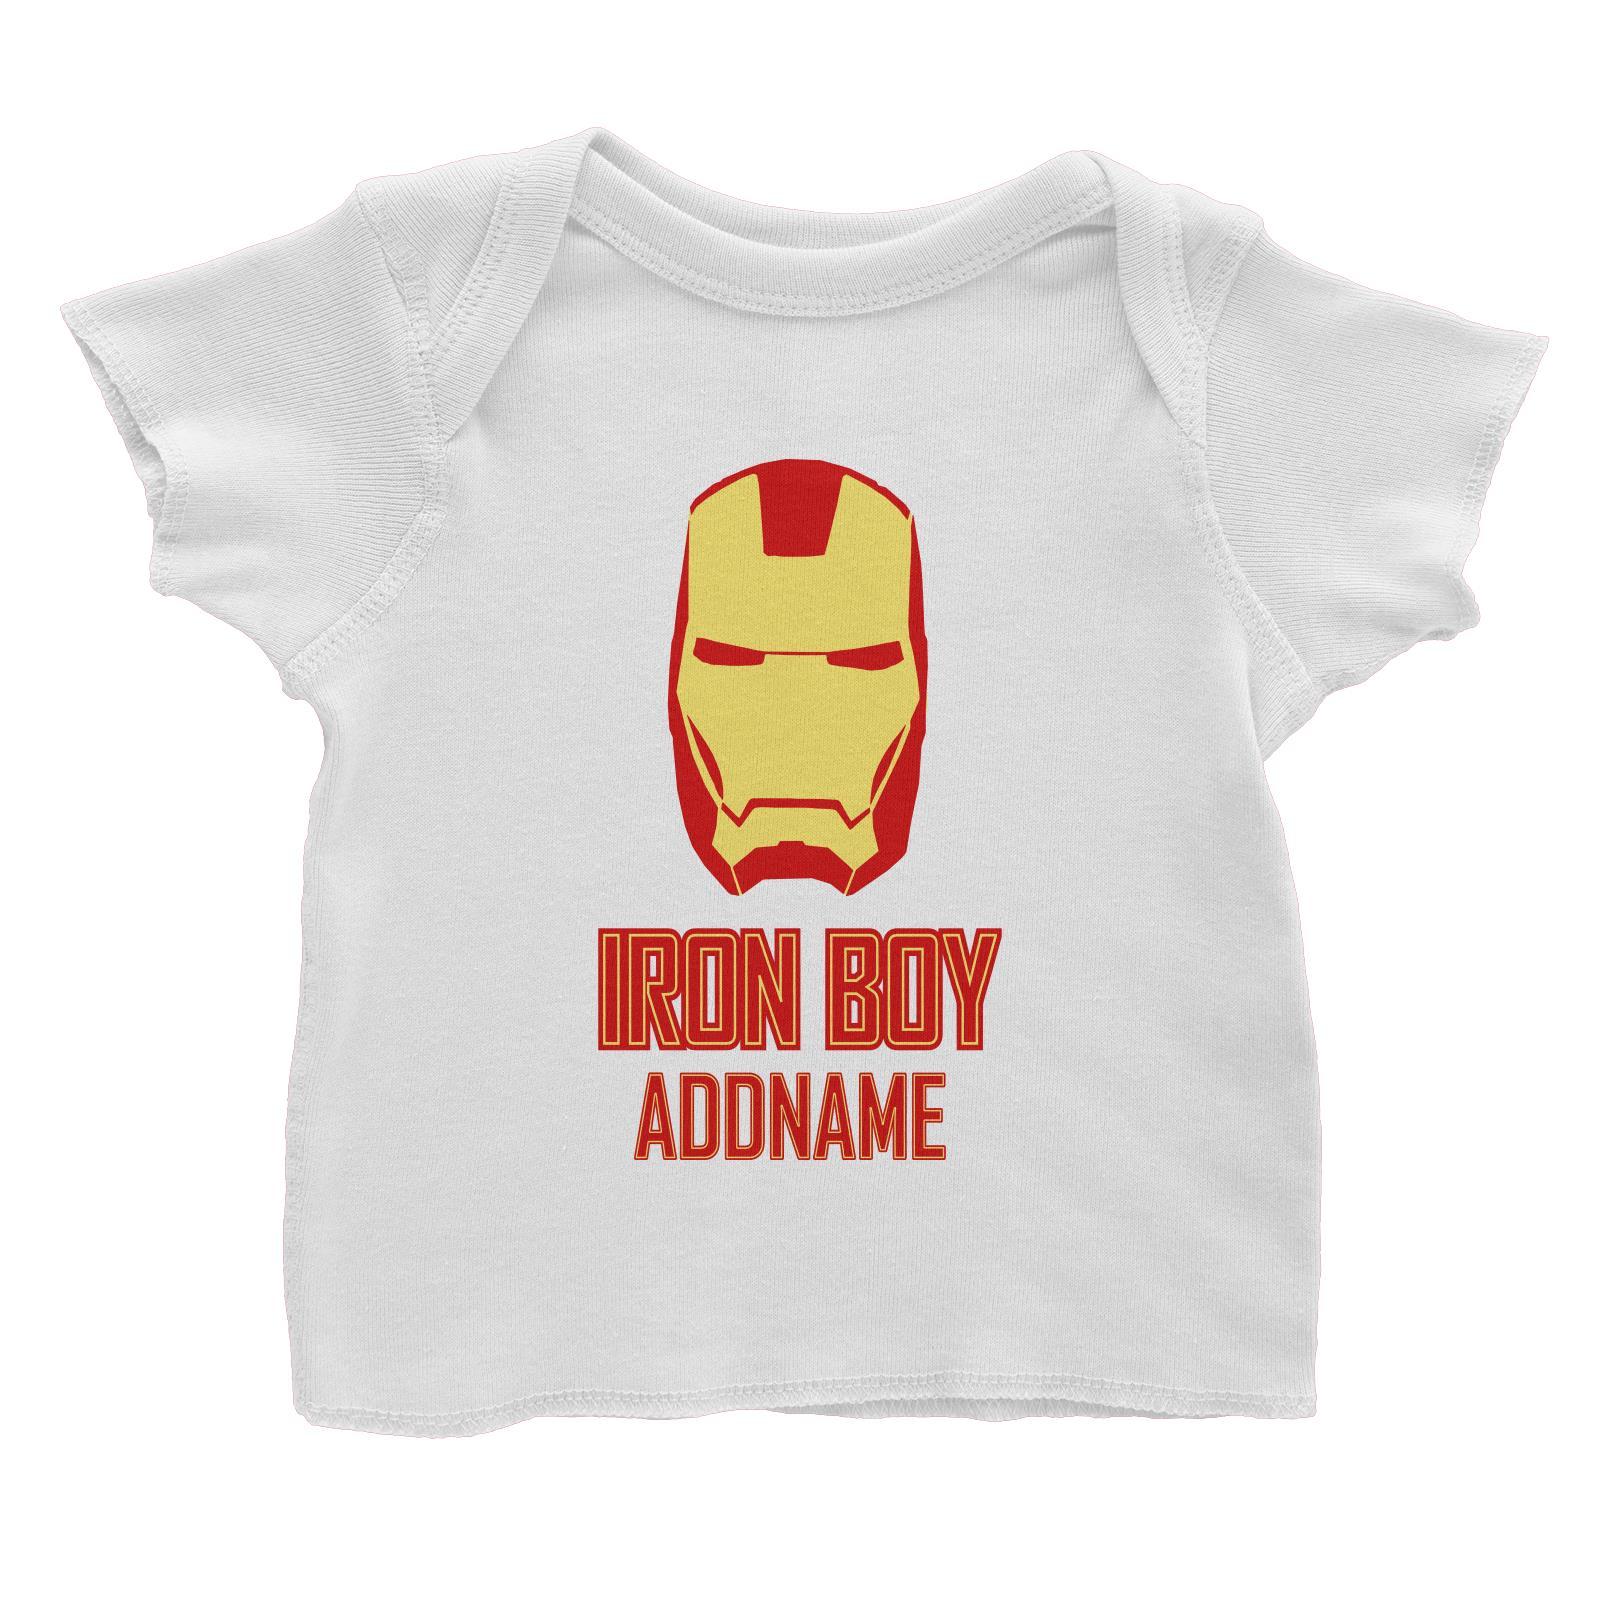 Superhero Iron Boy Addname Baby T-Shirt  Matching Family Personalizable Designs